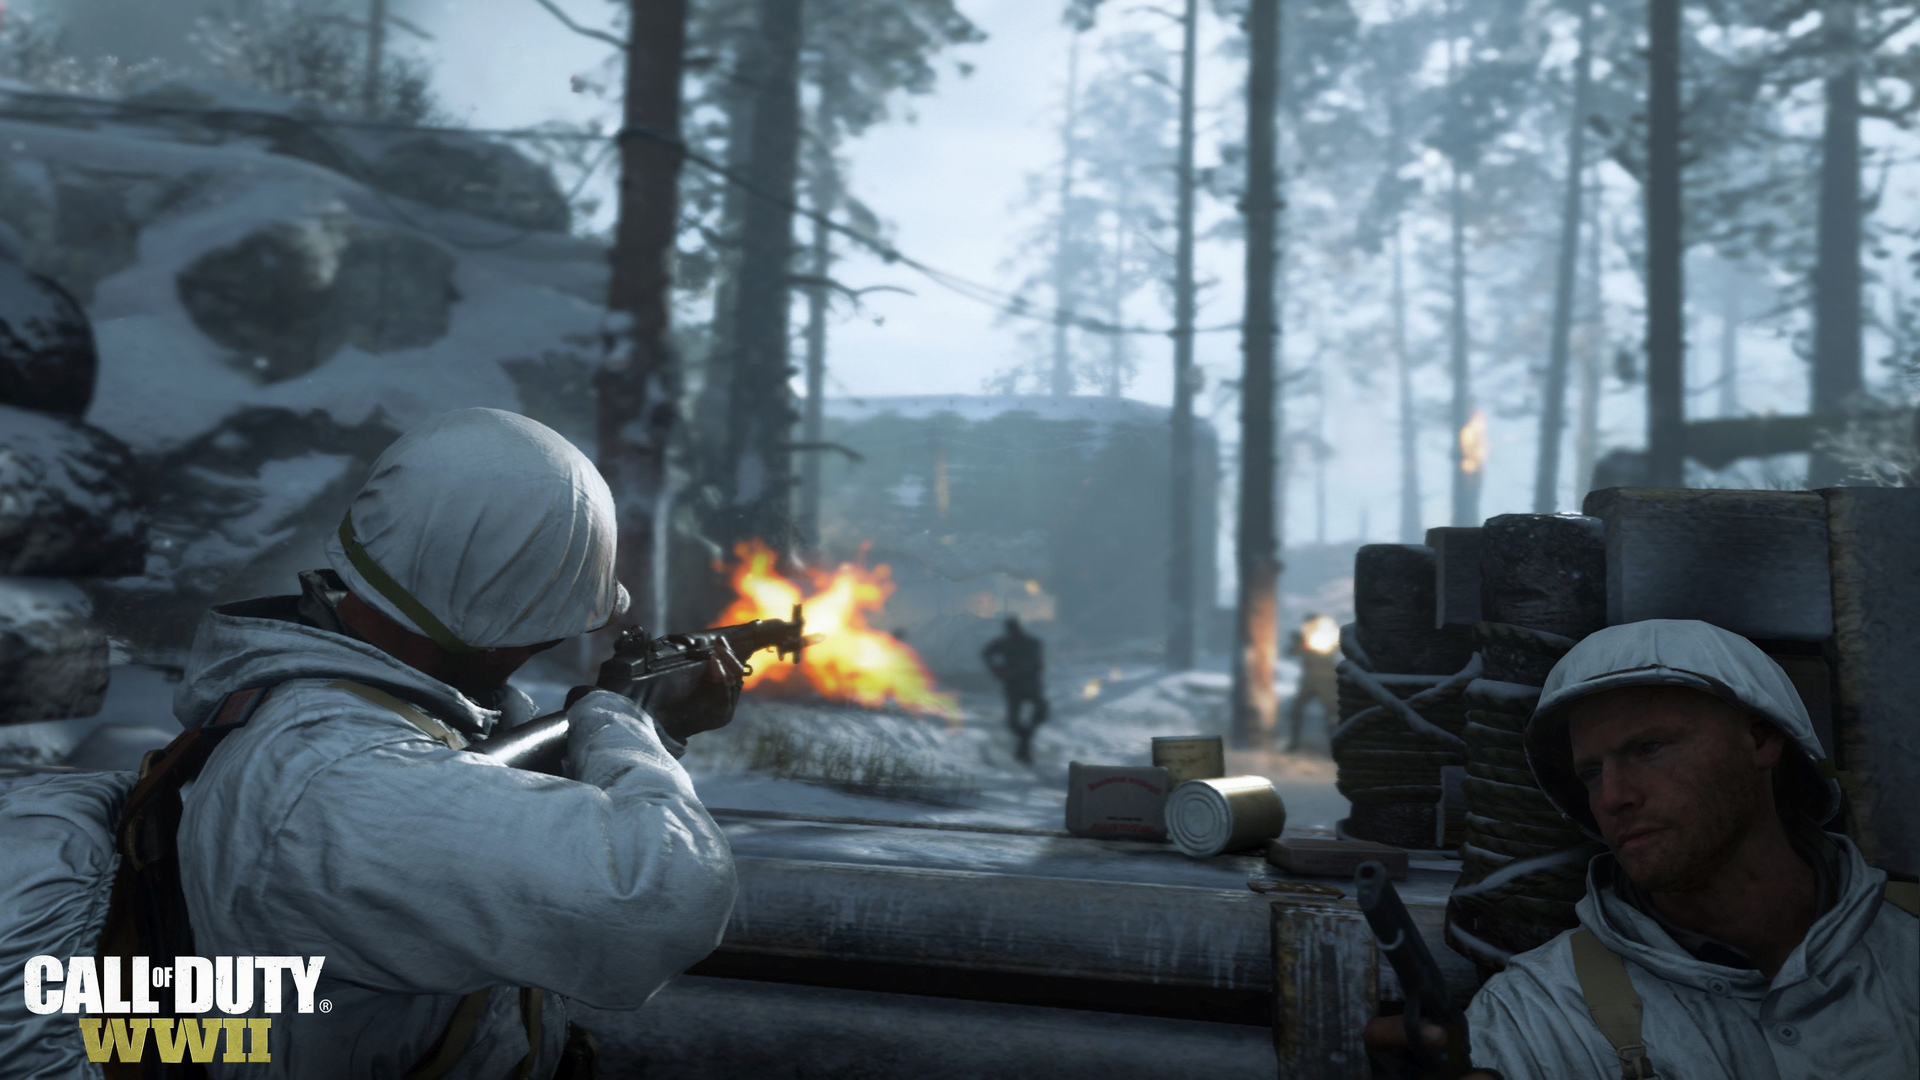 Detaily o mitrotransakcích a eSportu v Call of Duty: WWII 146069